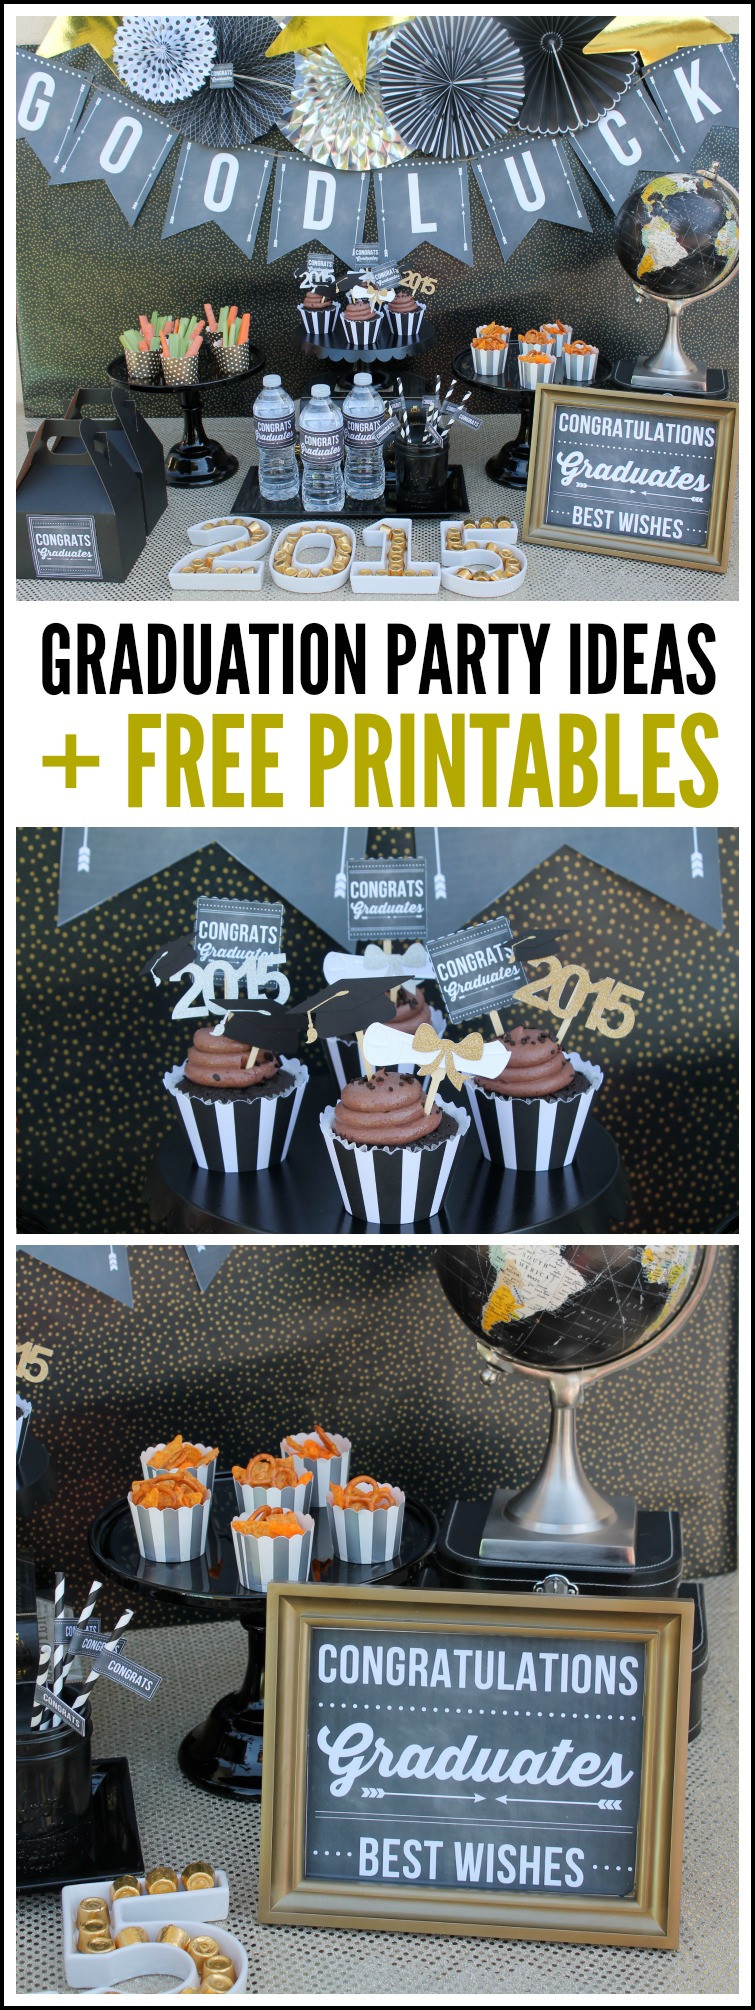 Free Graduation Party Ideas
 Graduation Party Ideas Free Printables